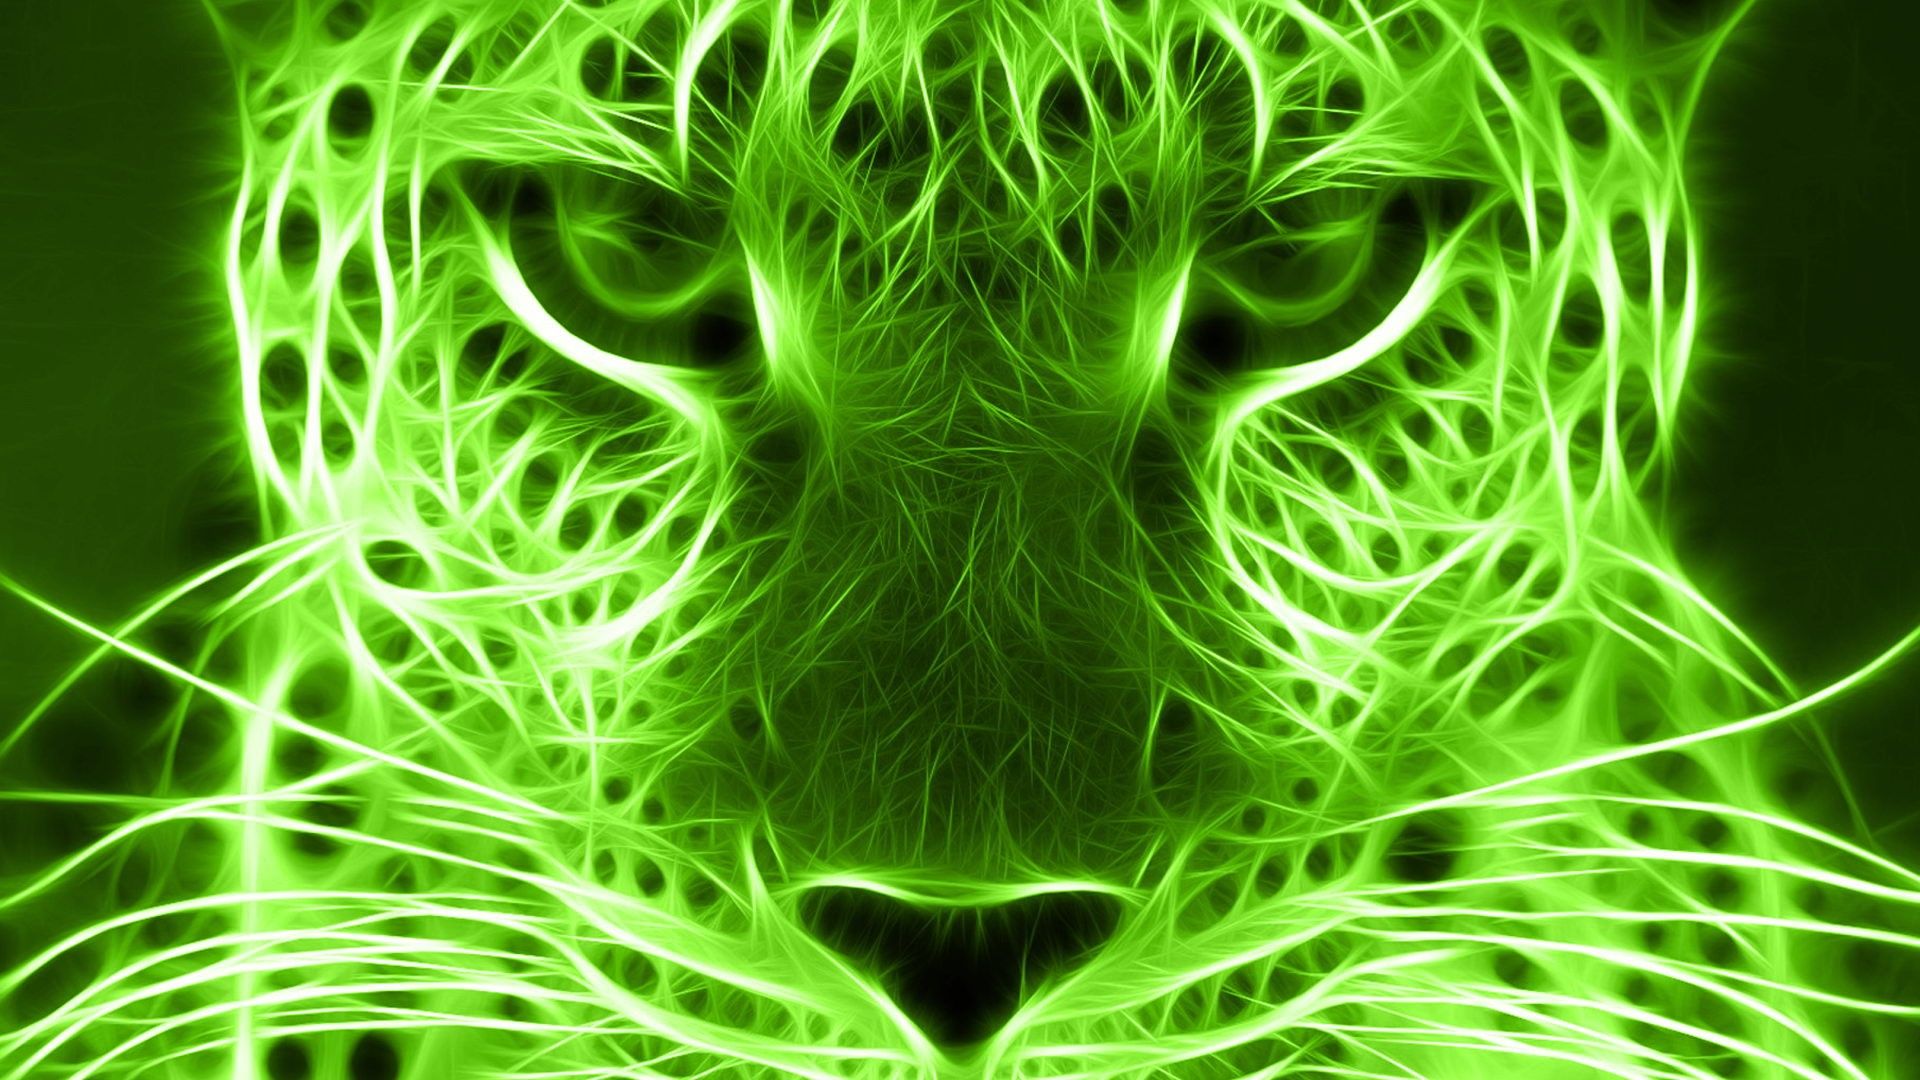 Neon green leopard wallpaper | | 1920x1080 | | Animals | Download ... - Lime green, neon green